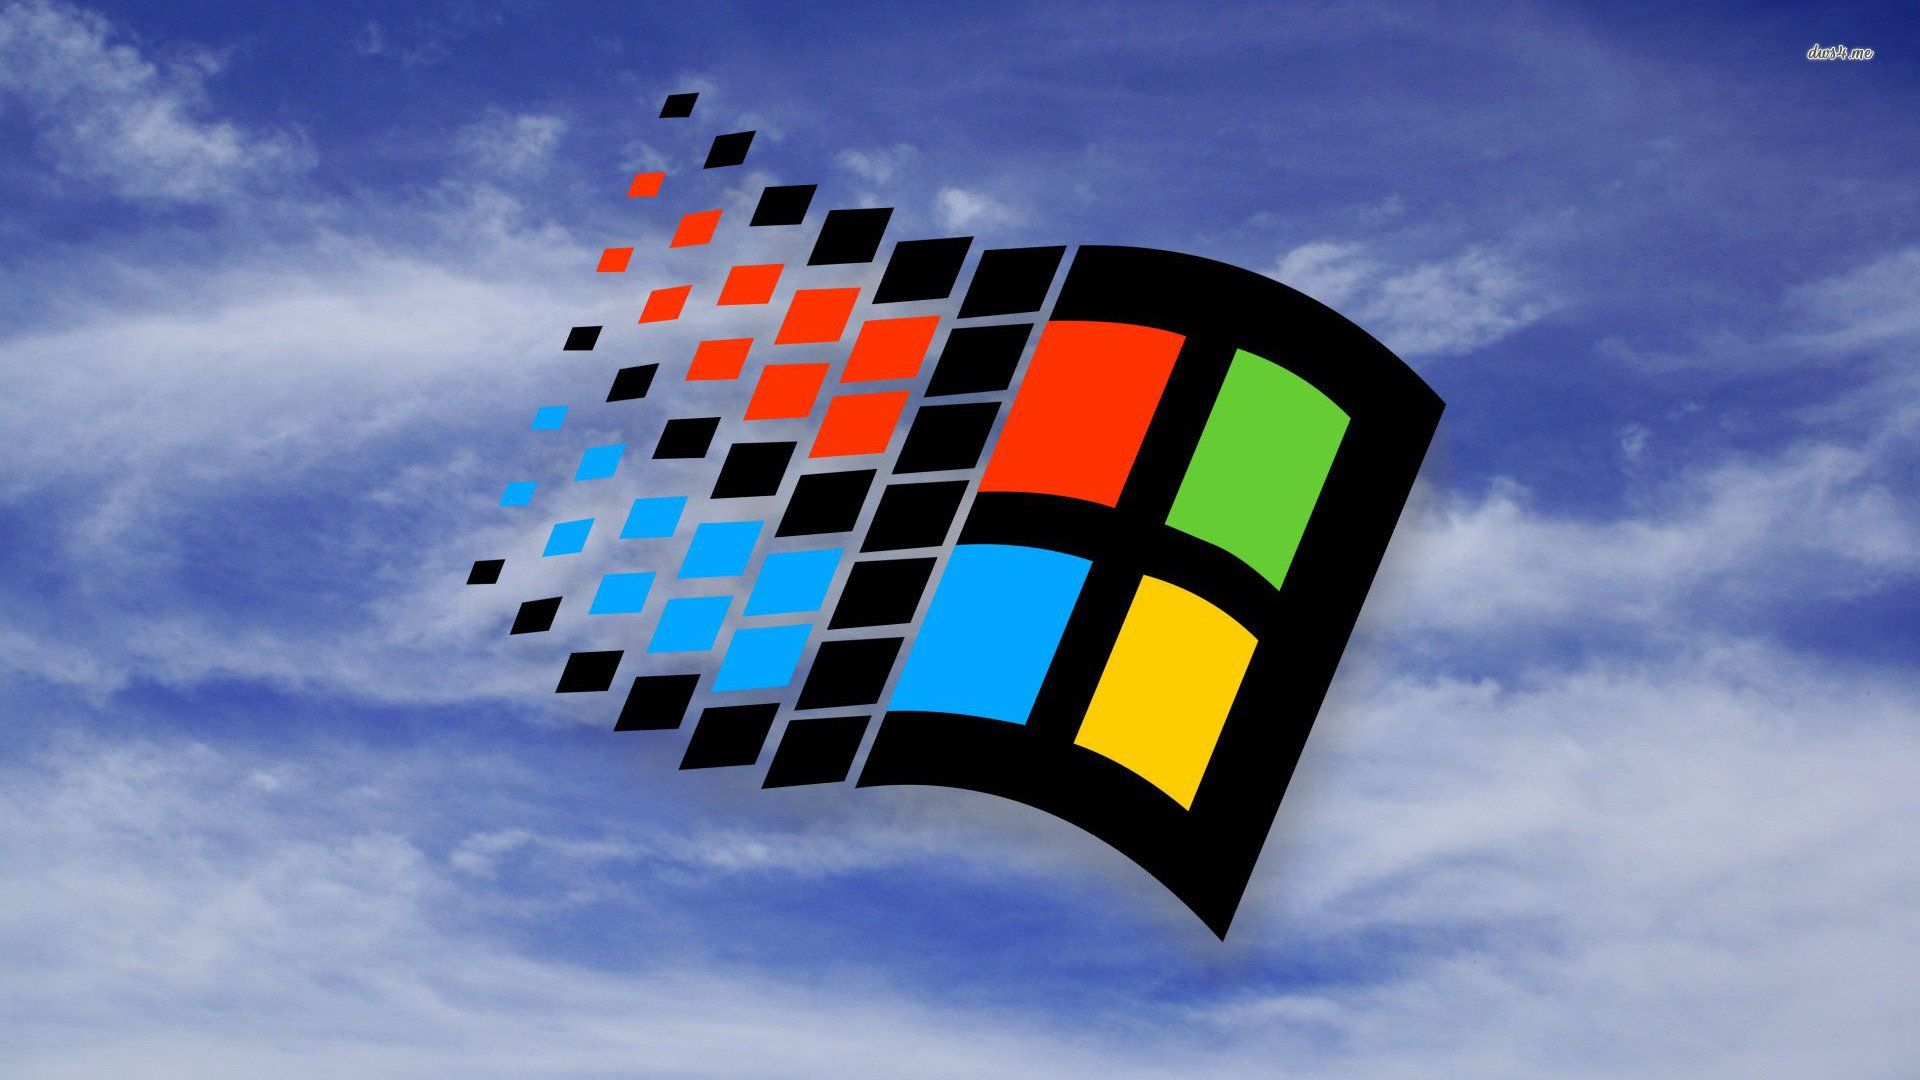 Windows 98 Wallpaper Free Windows 98 Background